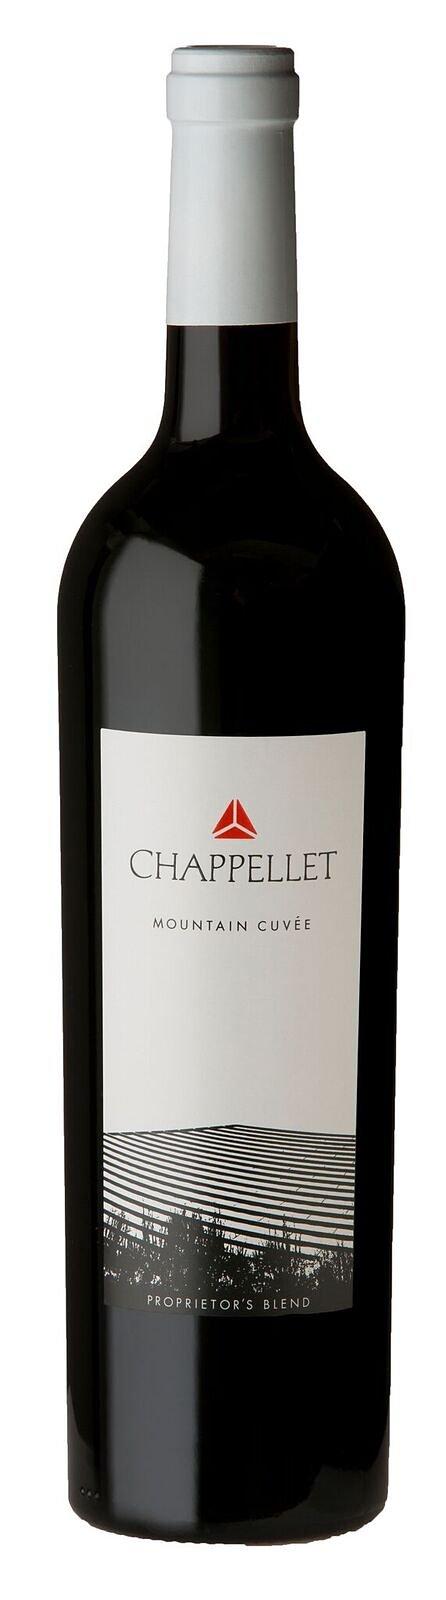 Chappellet 2017 Mountain Cuvee Red, Napa-Sonoma